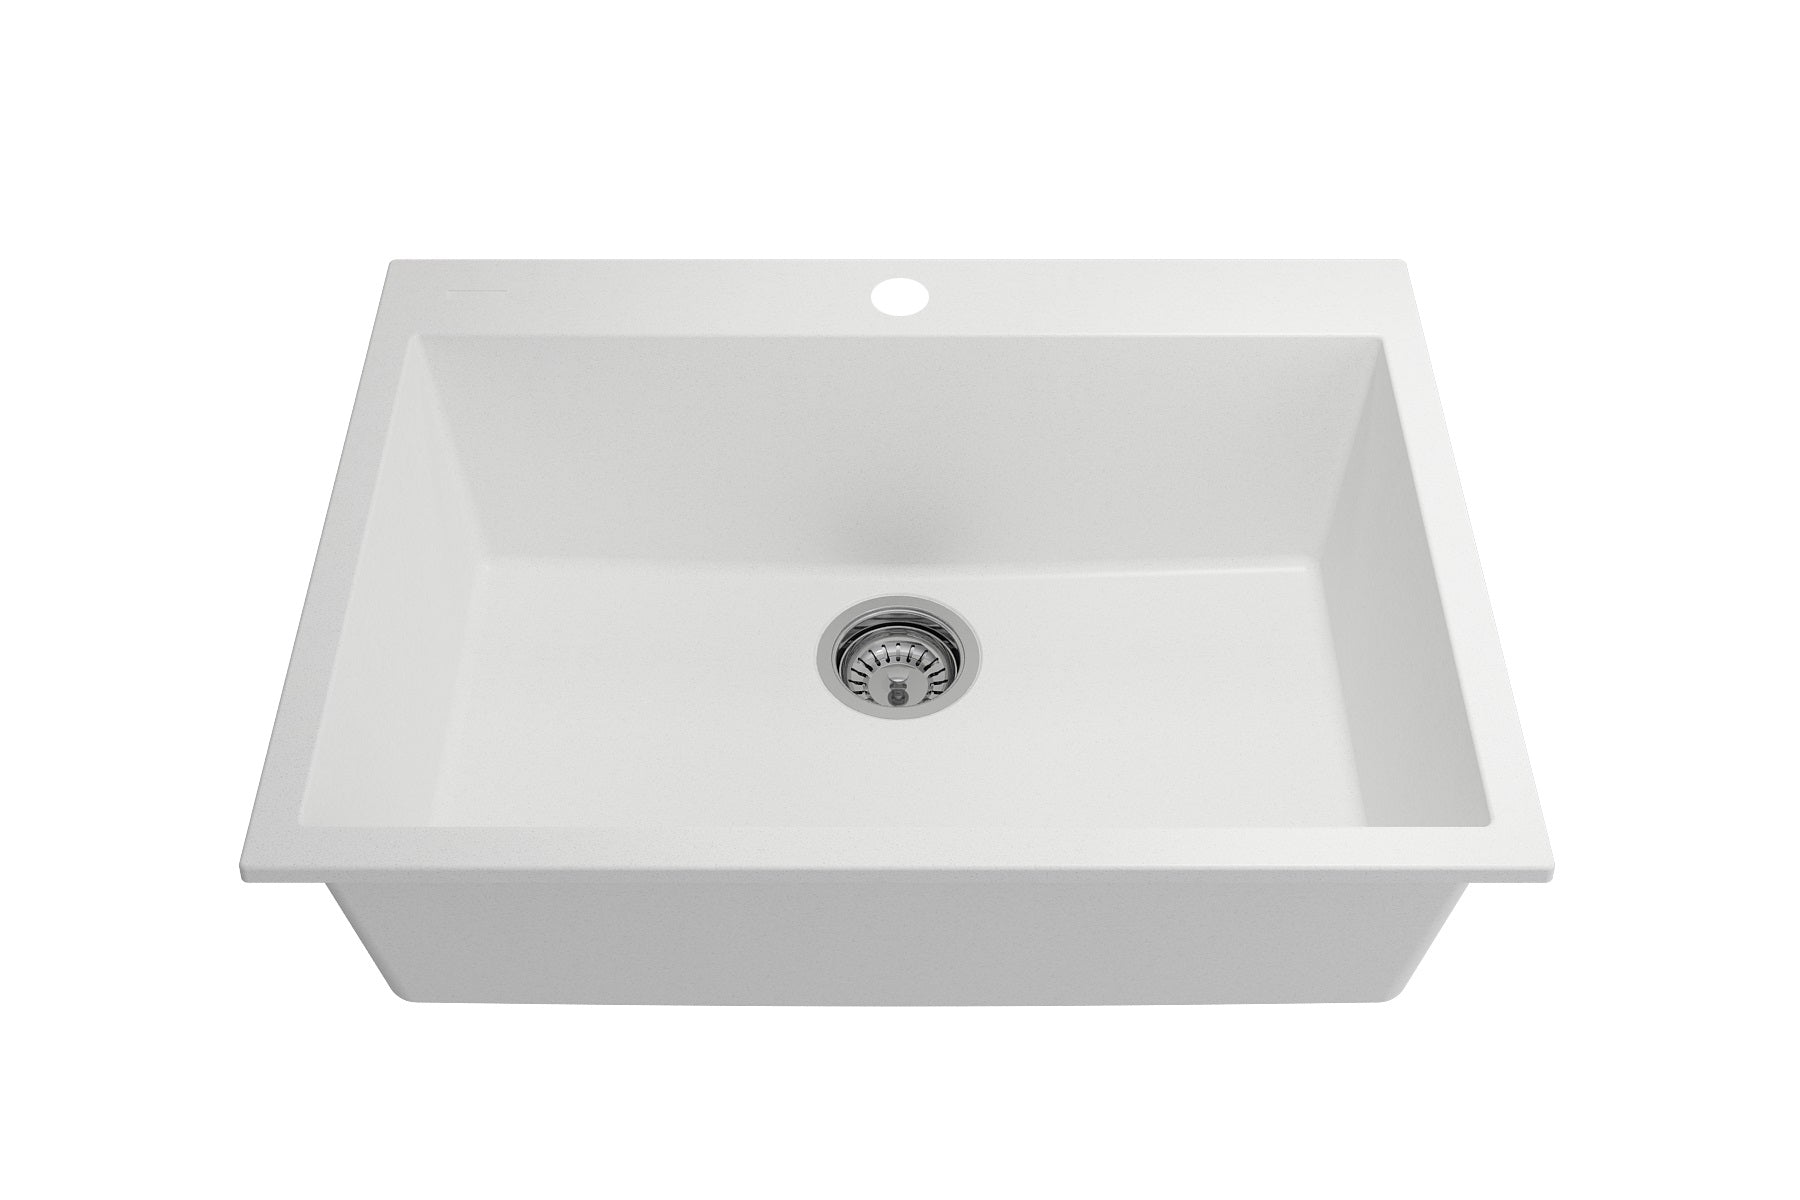 Bocchi 27" Dual-Mount Single Bowl Composite Kitchen Sink in Milk White